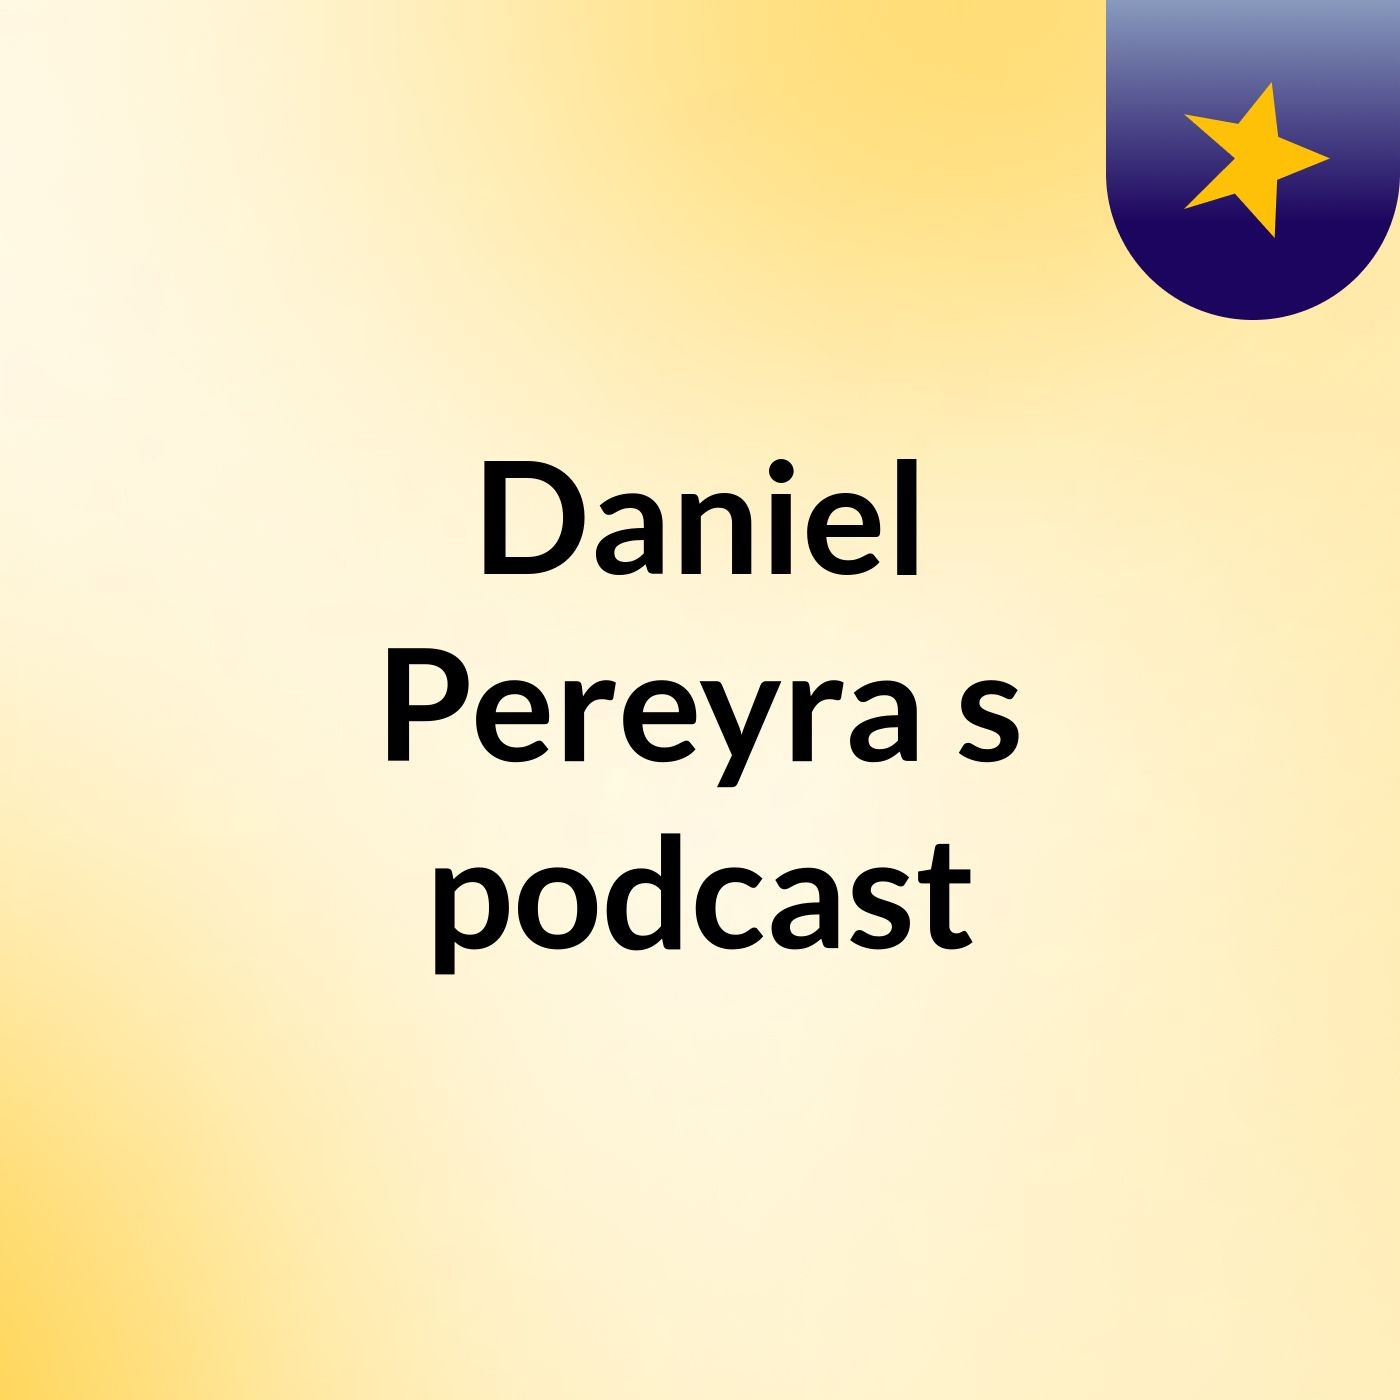 Daniel Pereyra's podcast